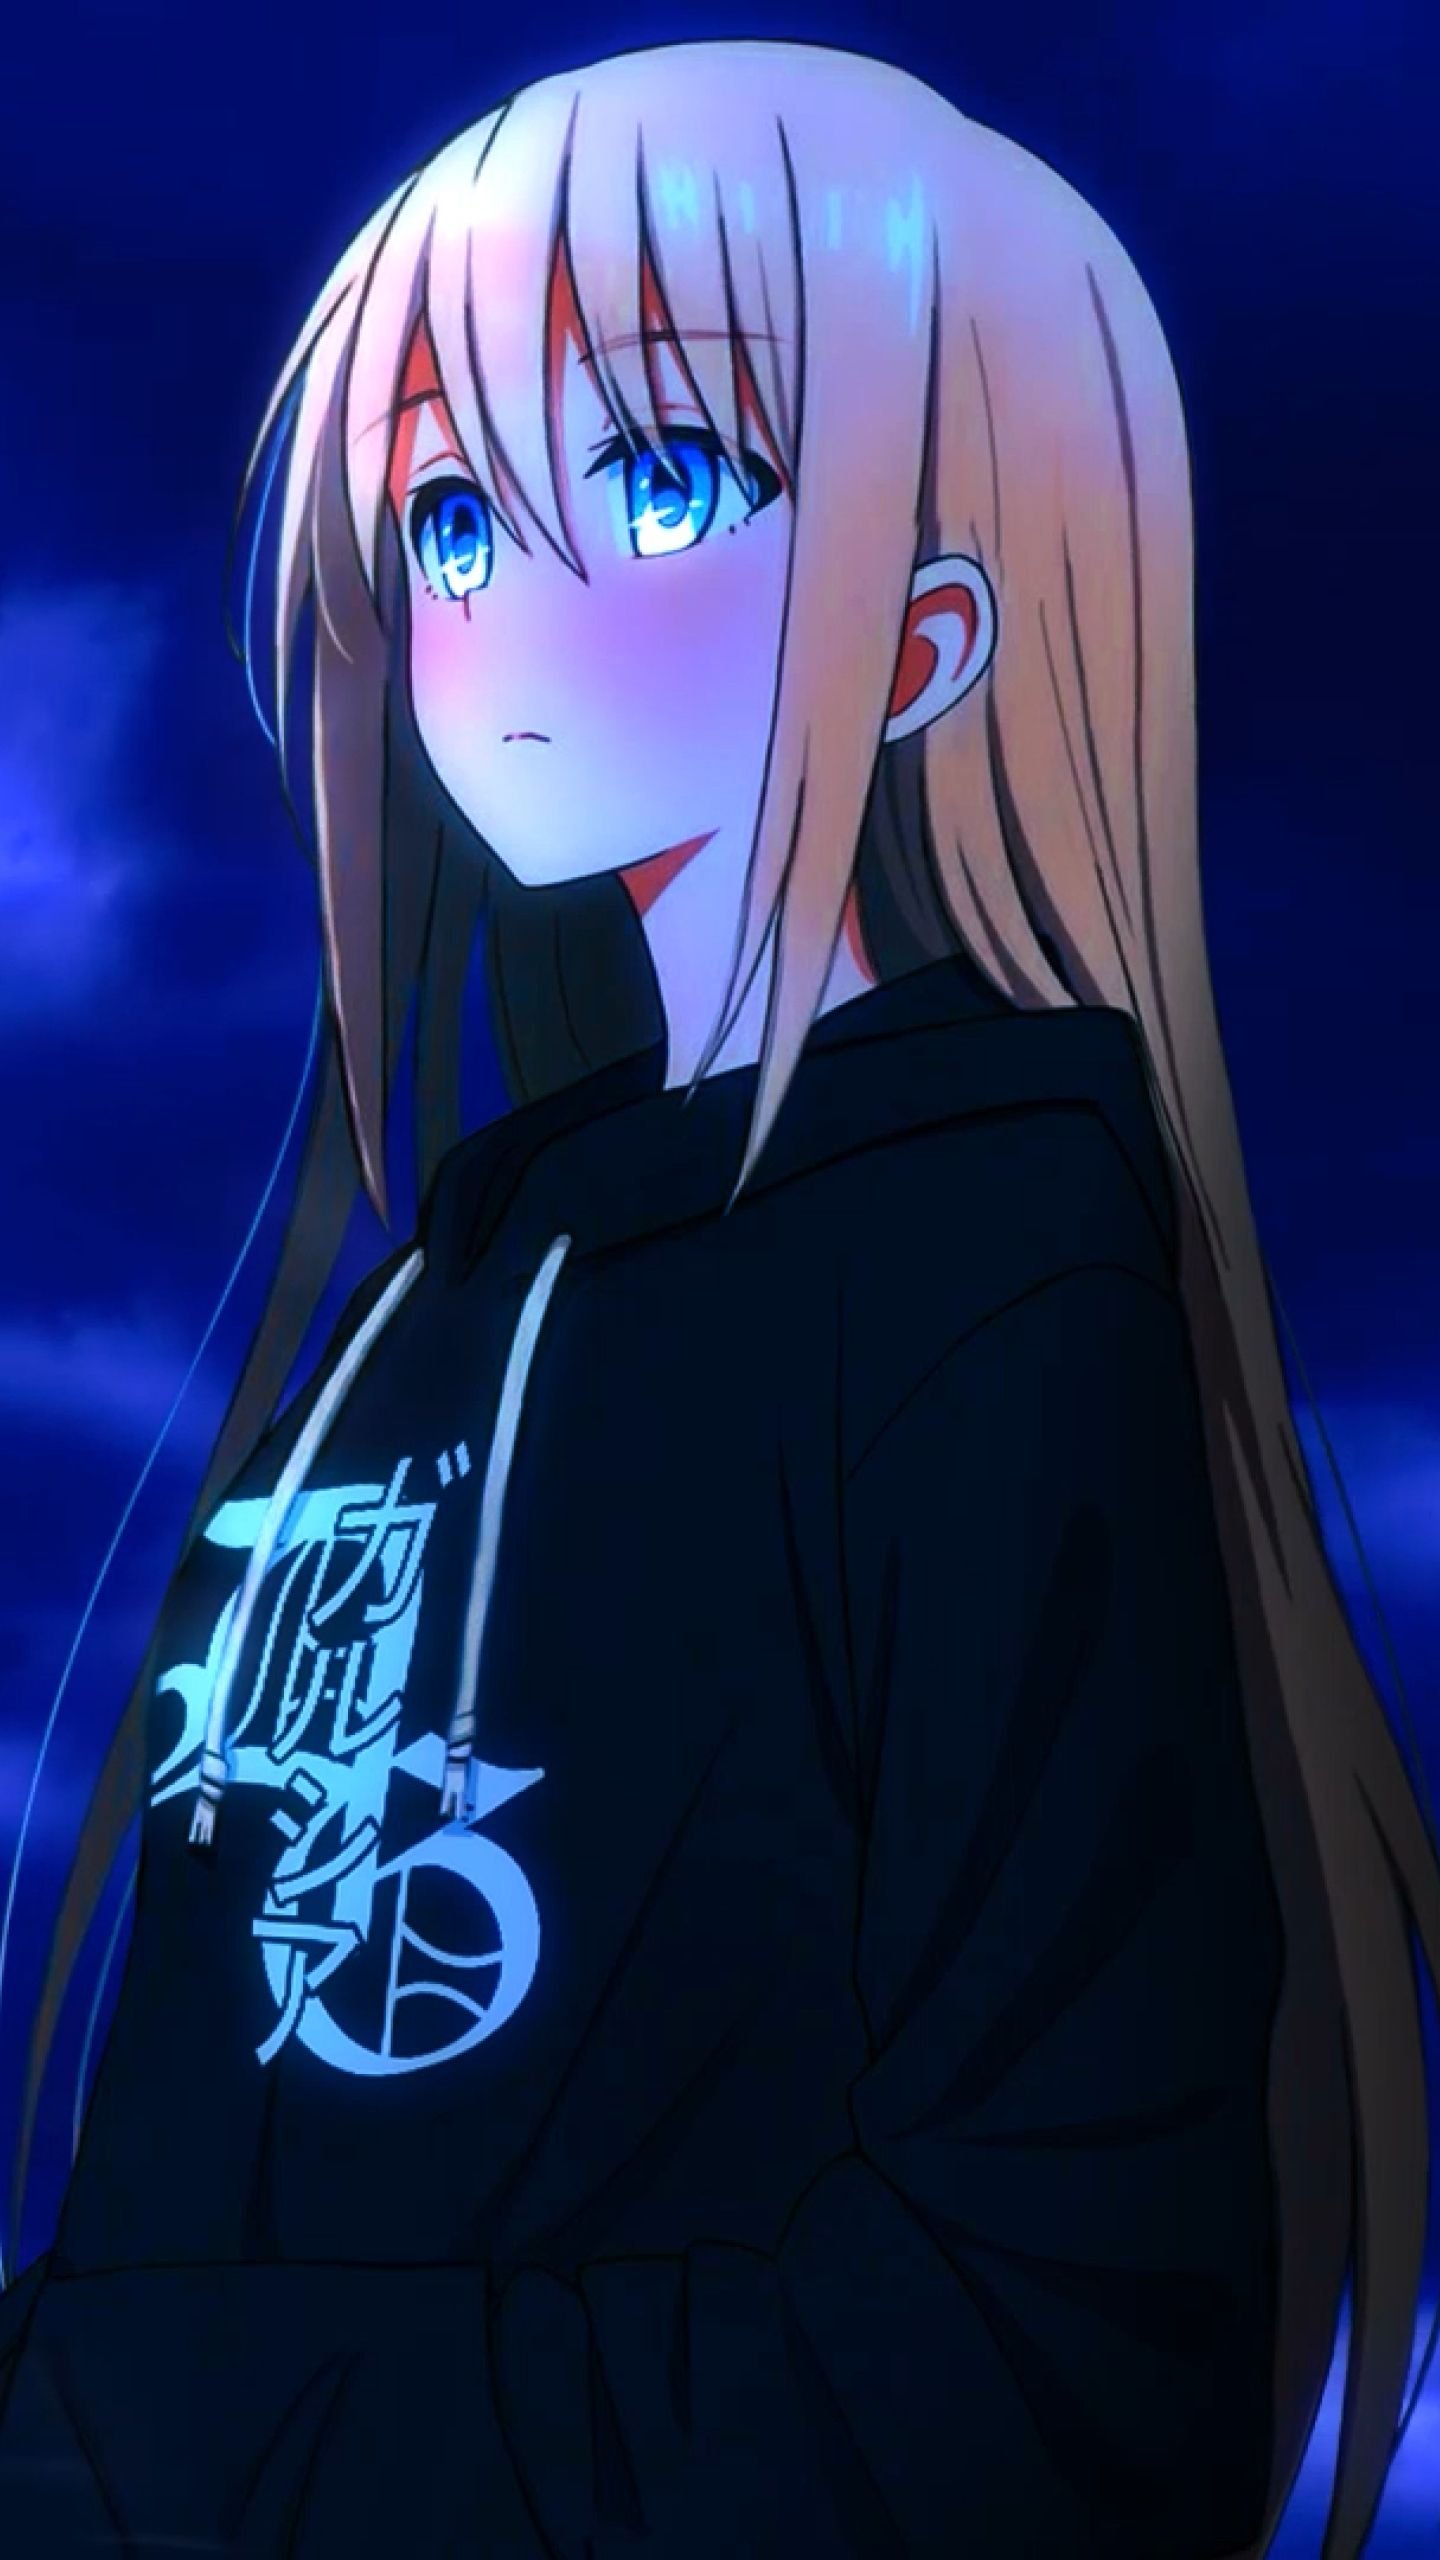 Lexica  anime guy in black hoodie